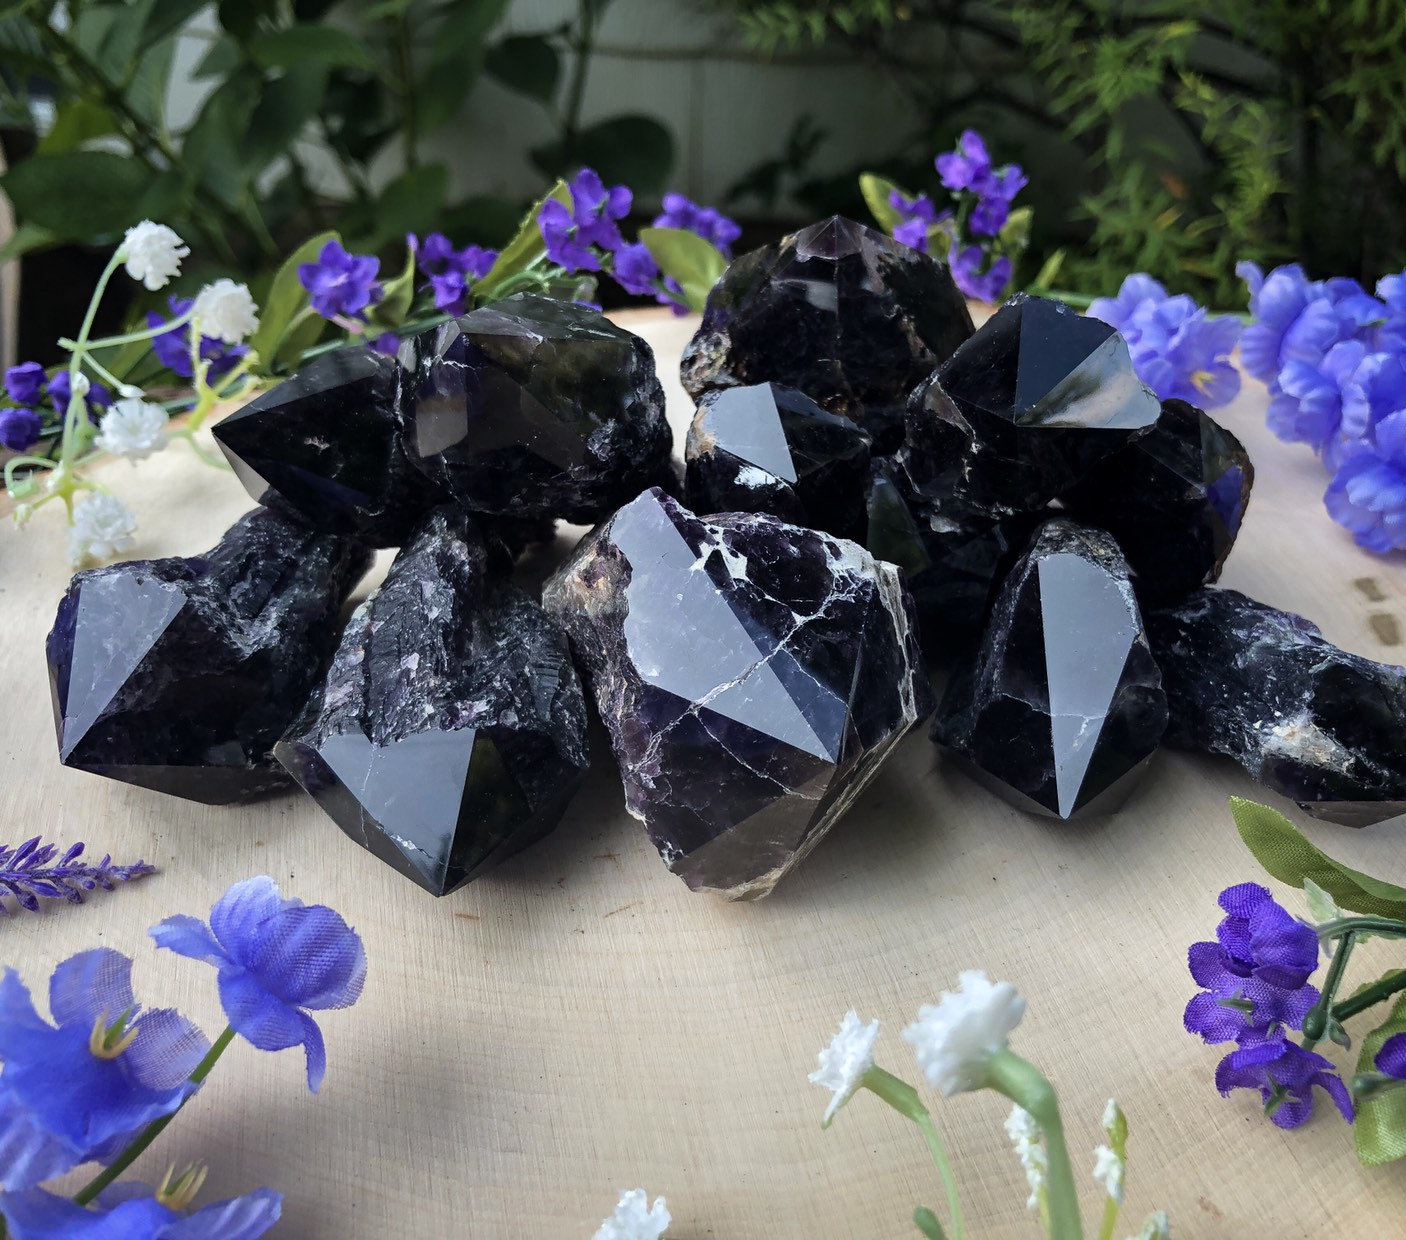 2 Crystal Flowers on a Black Stock Image - Image of jewel, amethyst:  16516169